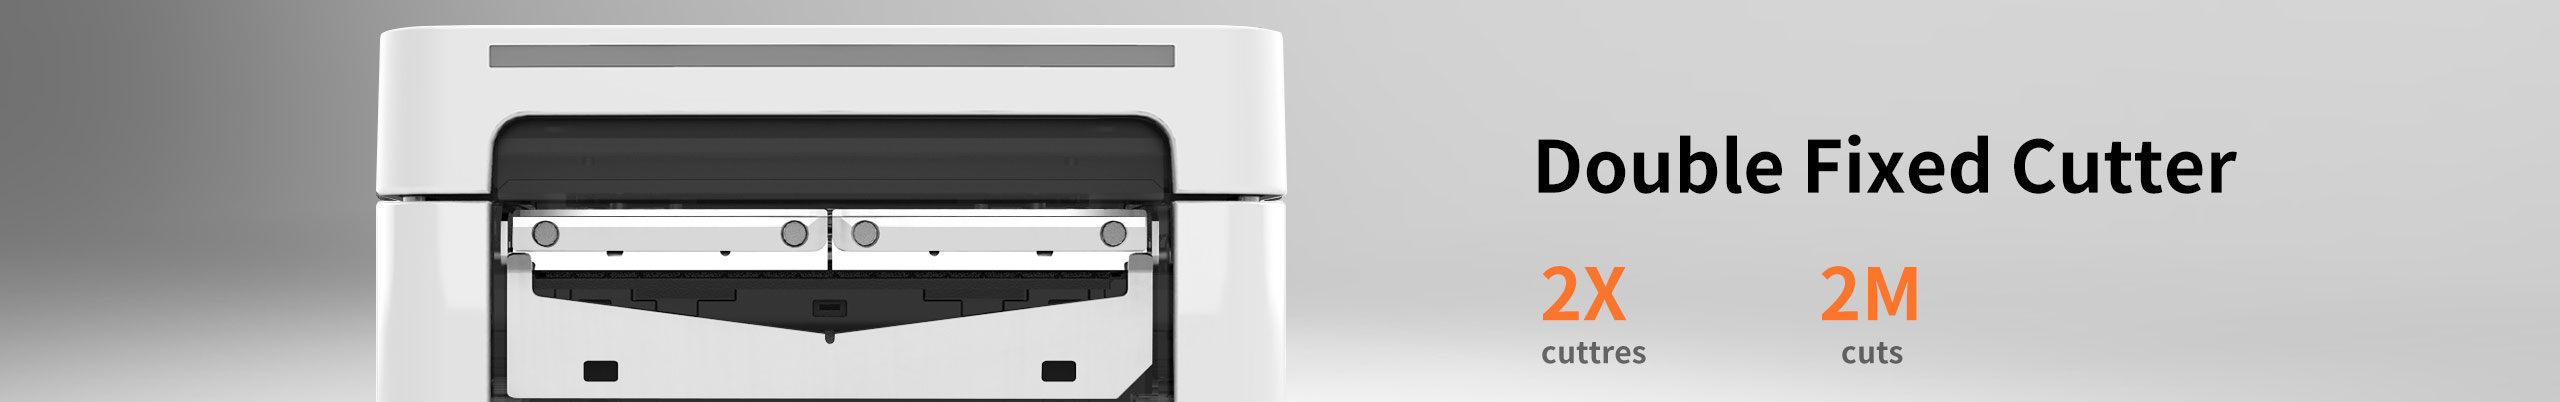 Thermal Pos Printer